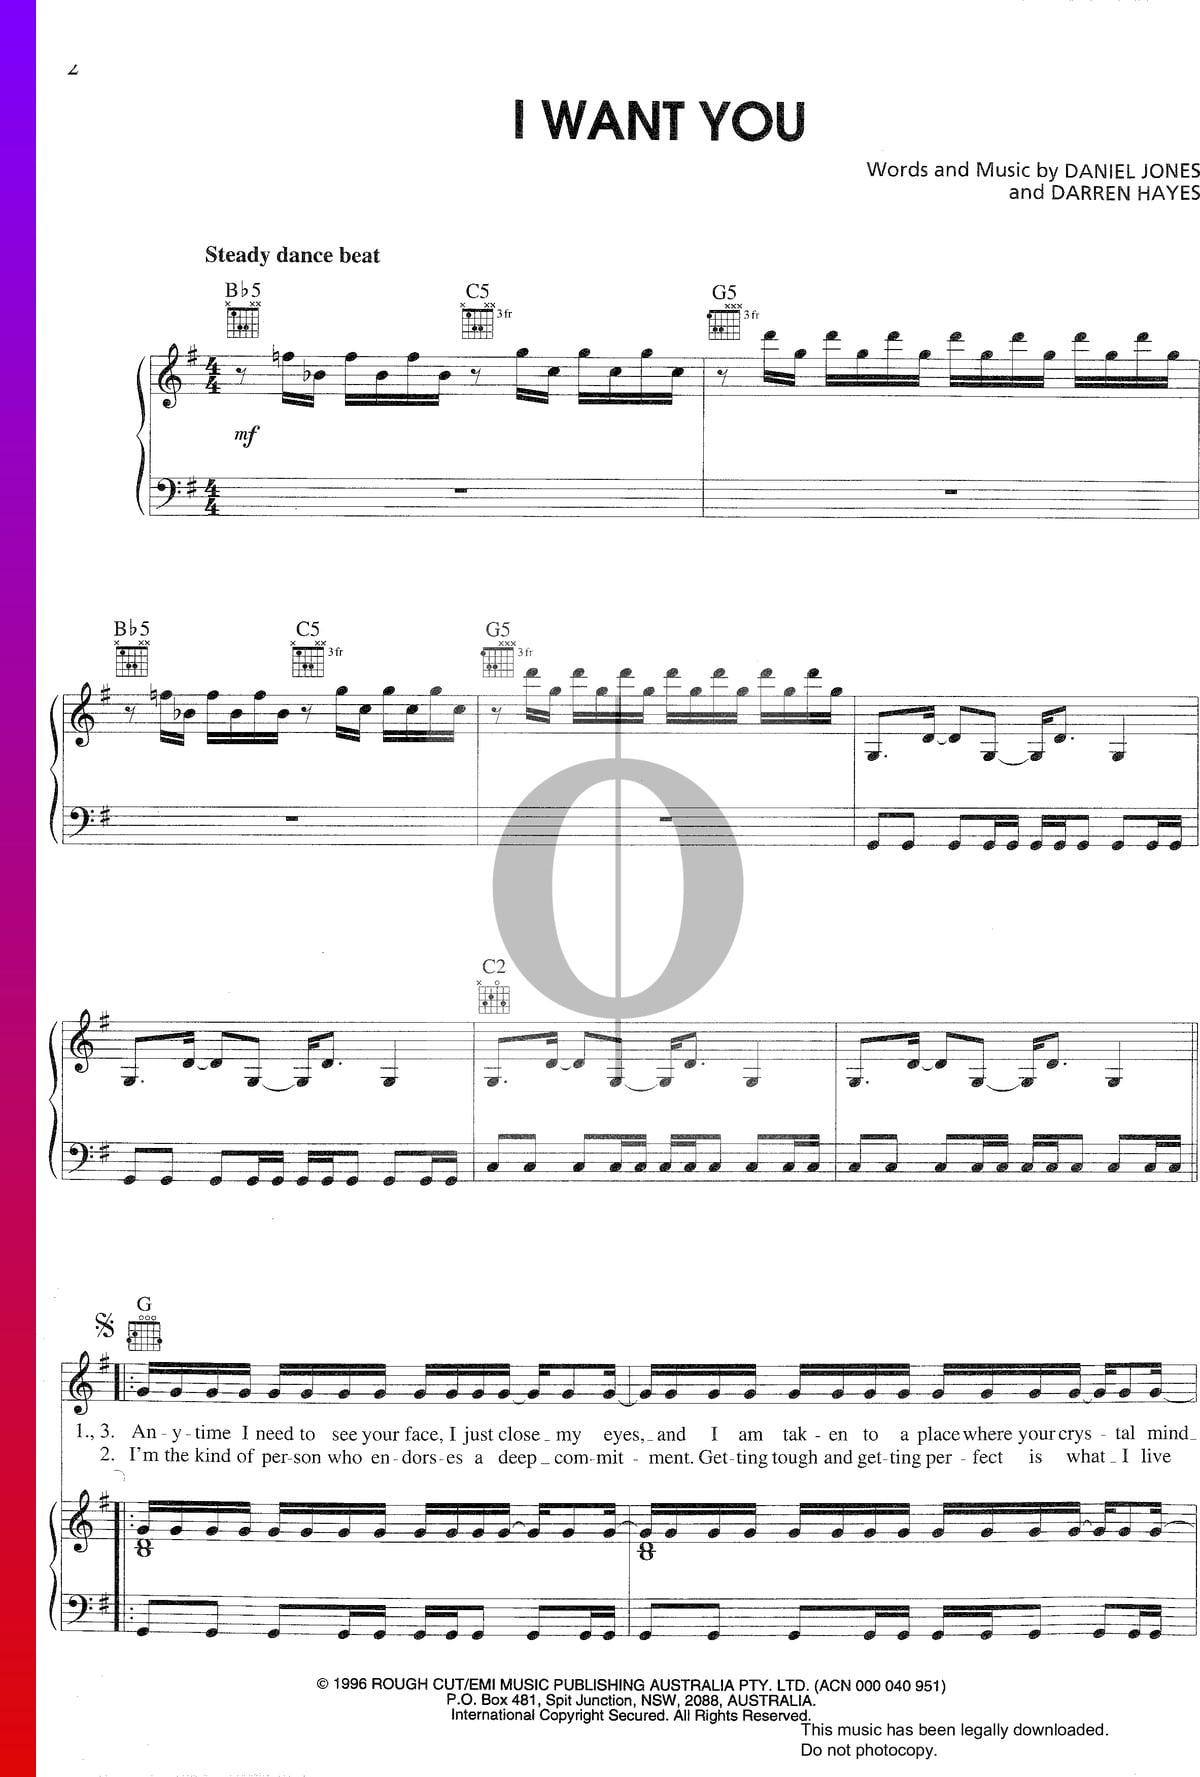 I Want You Sheet Music (Piano, Guitar, Voice) - OKTAV